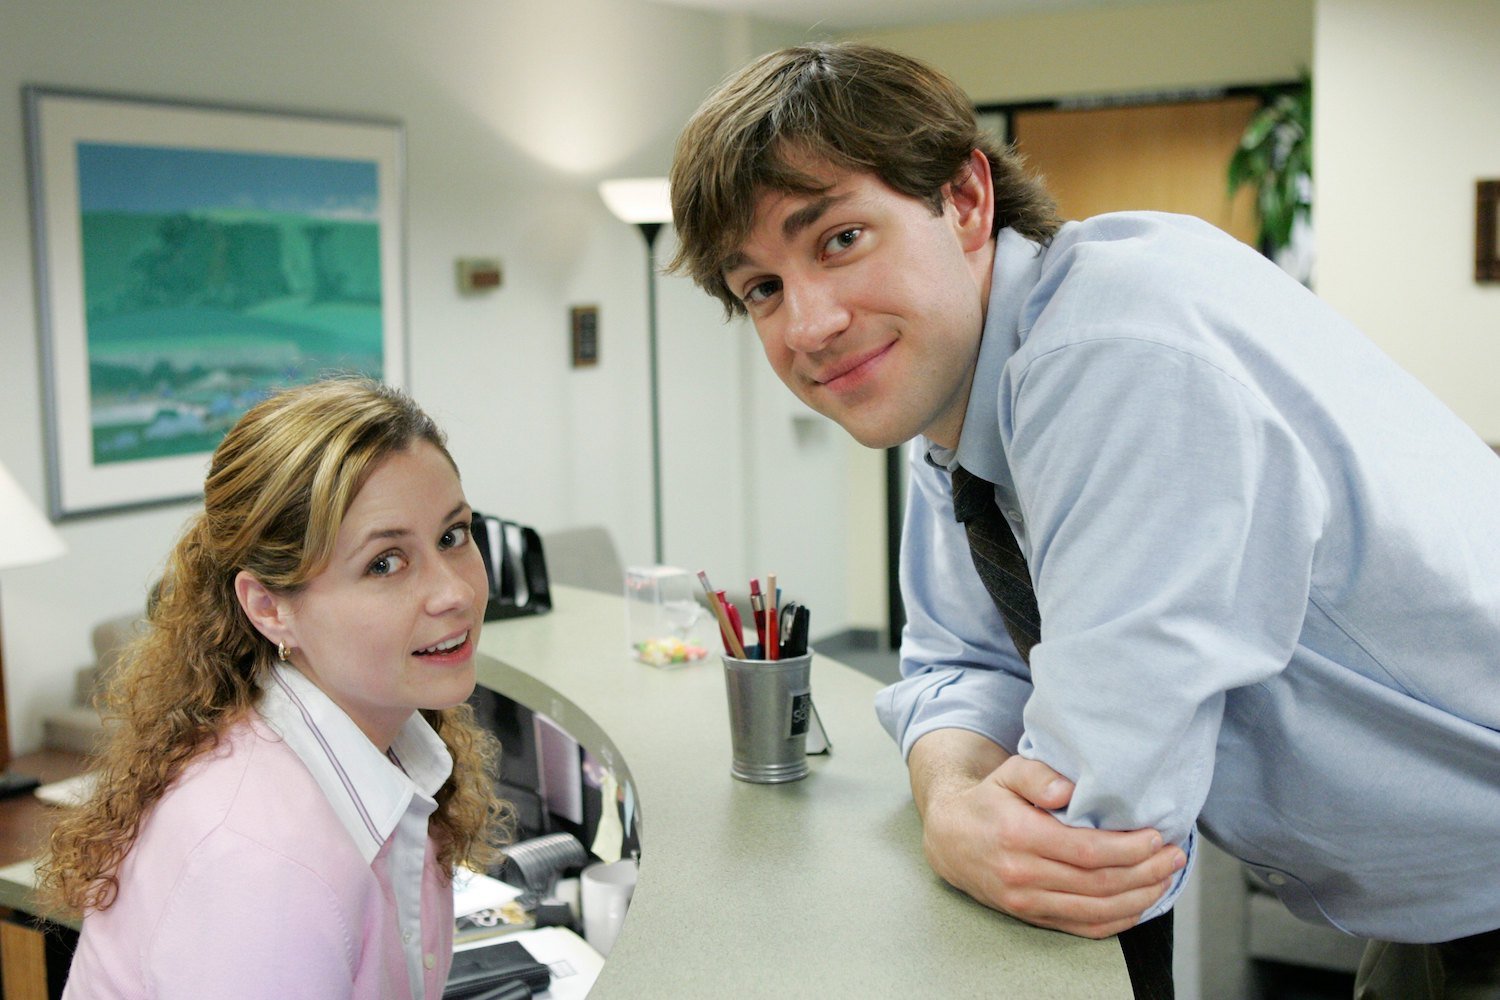 The Office stars Jenna Fischer and John Krasinski pose at the reception desk as Pam and Jim